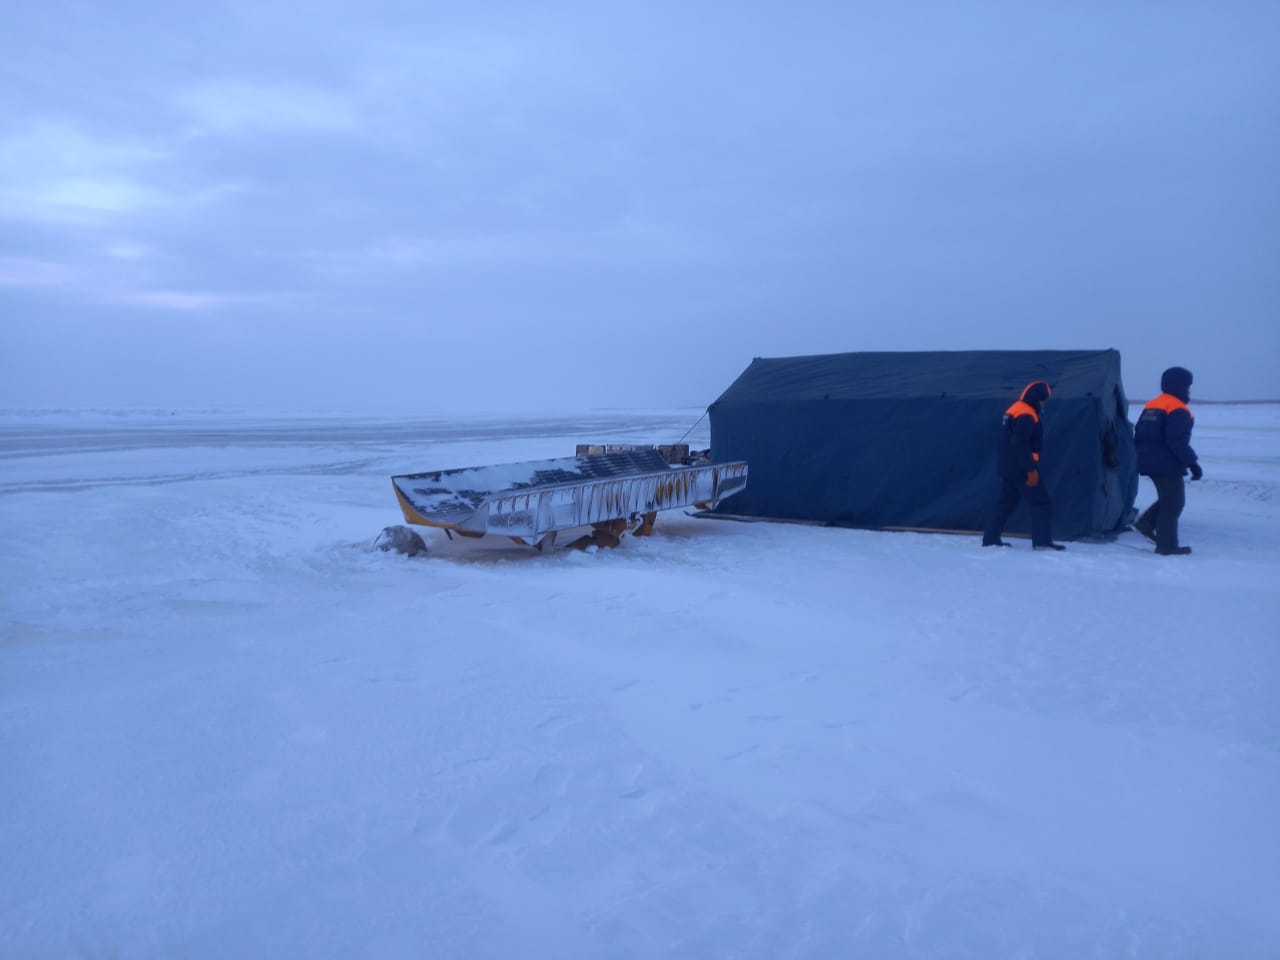 Экологи проверяют наличие загрязнения на месте провала трактора на реке Лене в Якутии